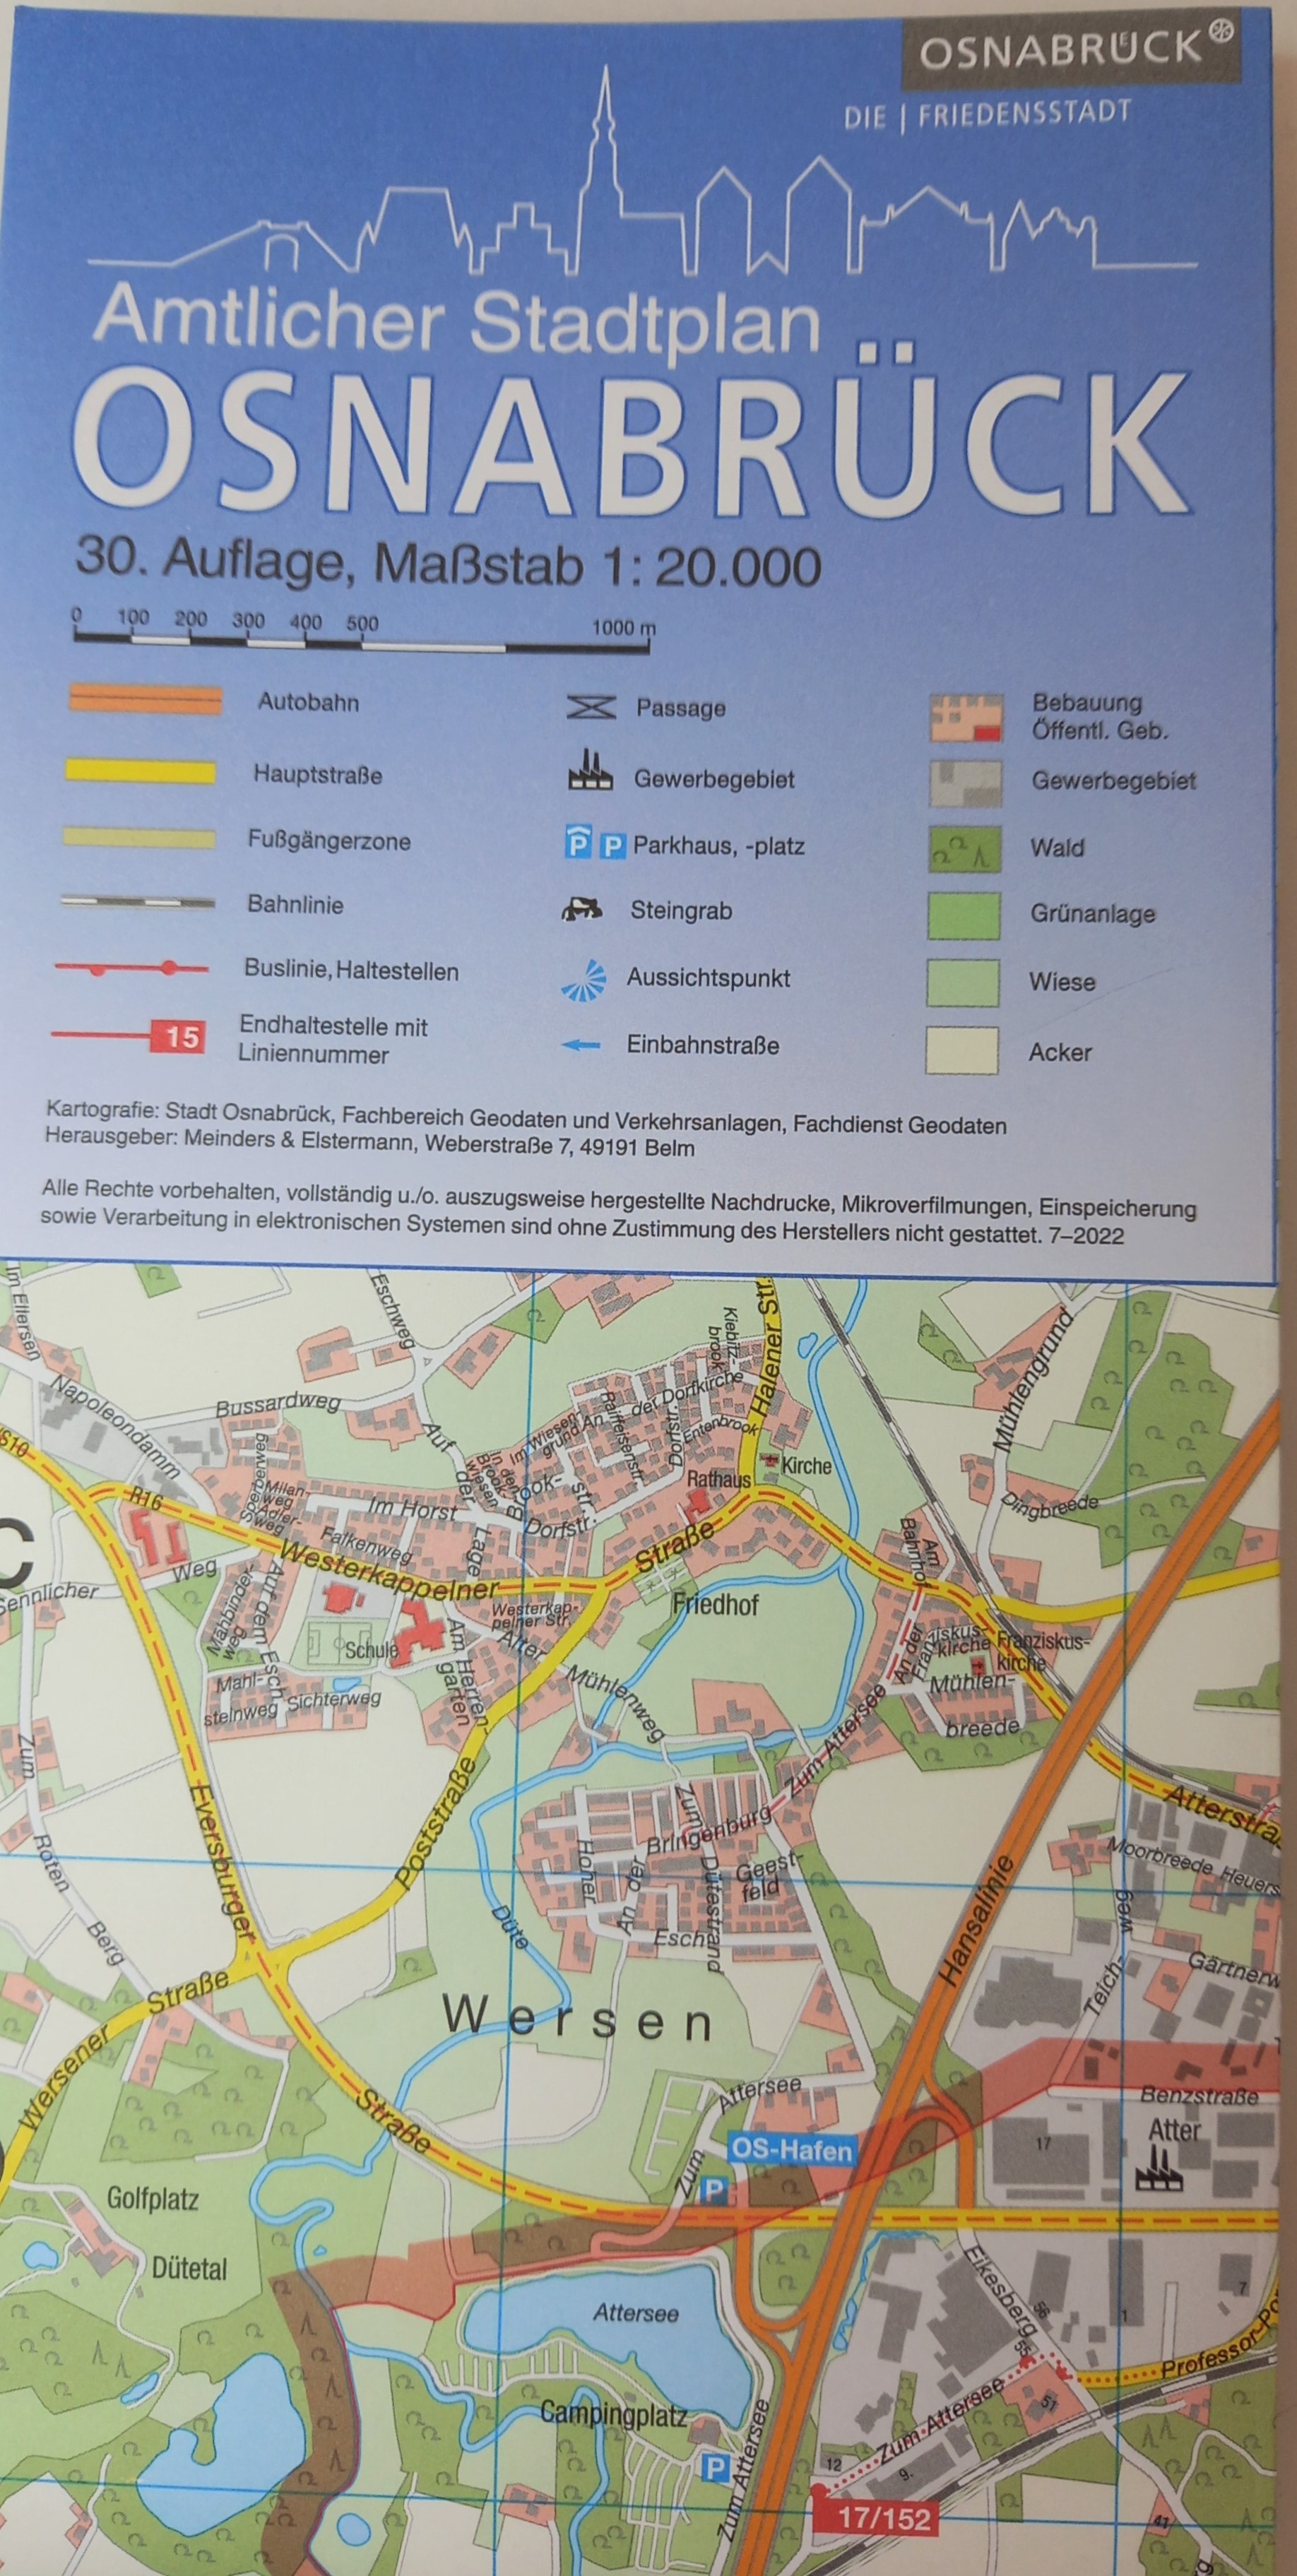 Amtlicher Stadtplan Osnabrück